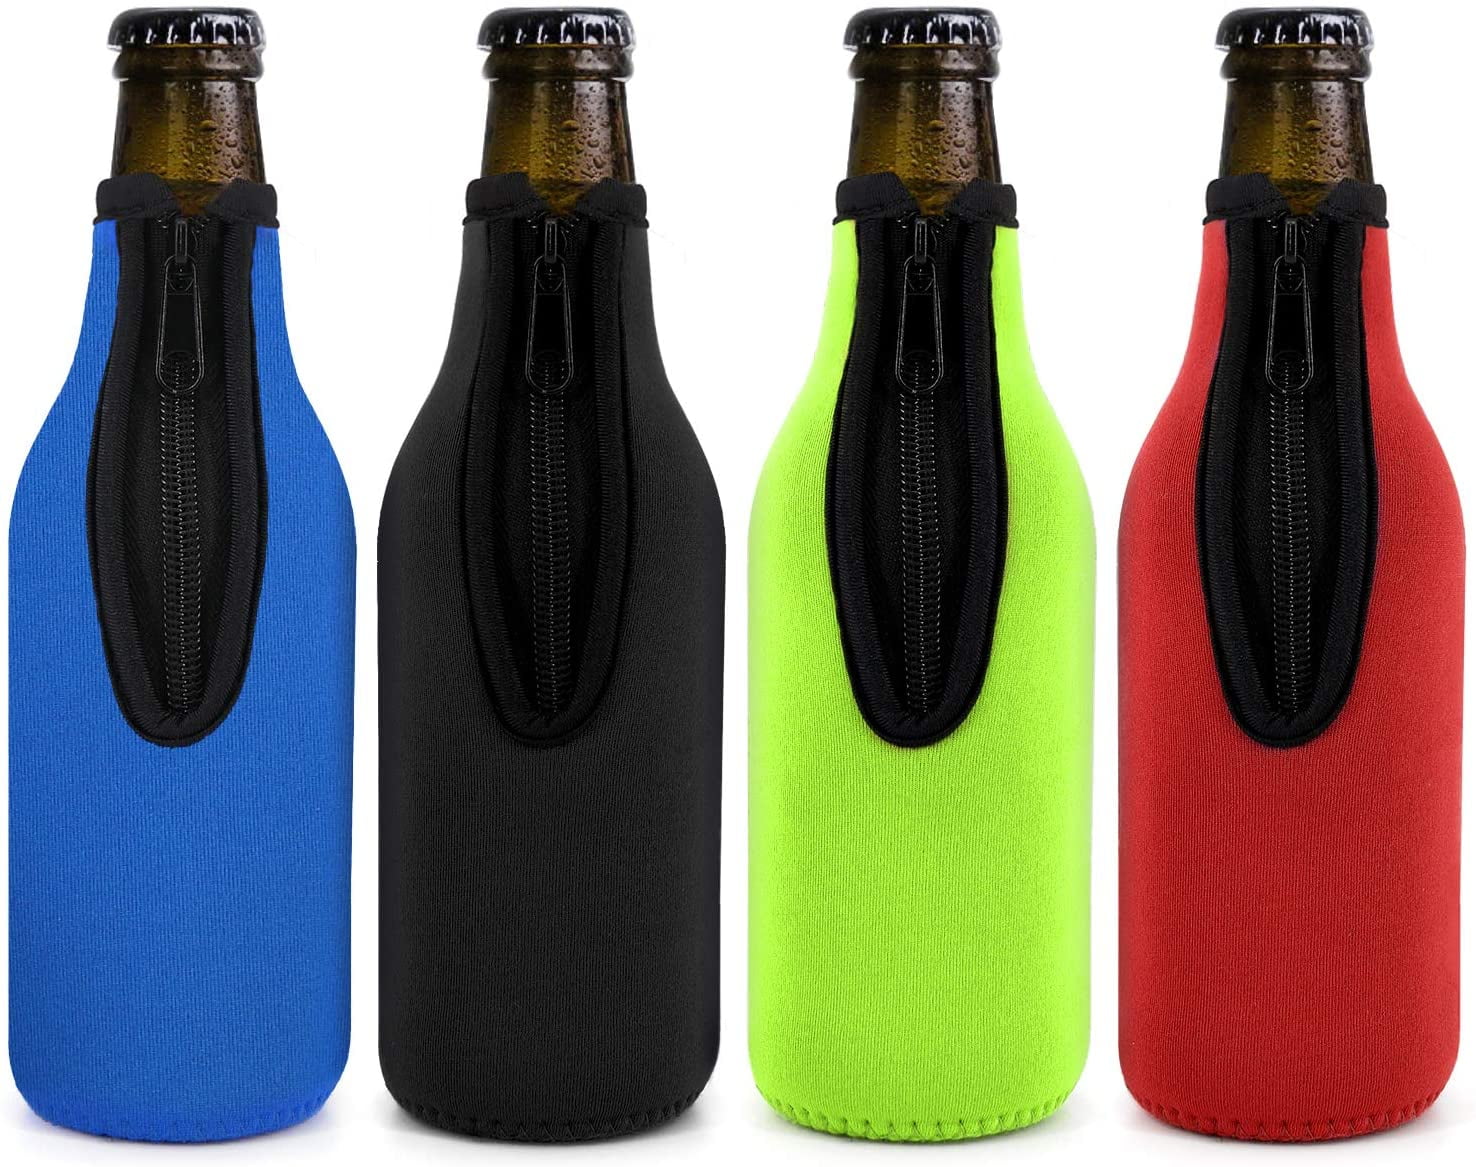 Coolie Neoprene Insulators New Free Shipping Lot Of 2 Bud Light Beer Can Koozie 